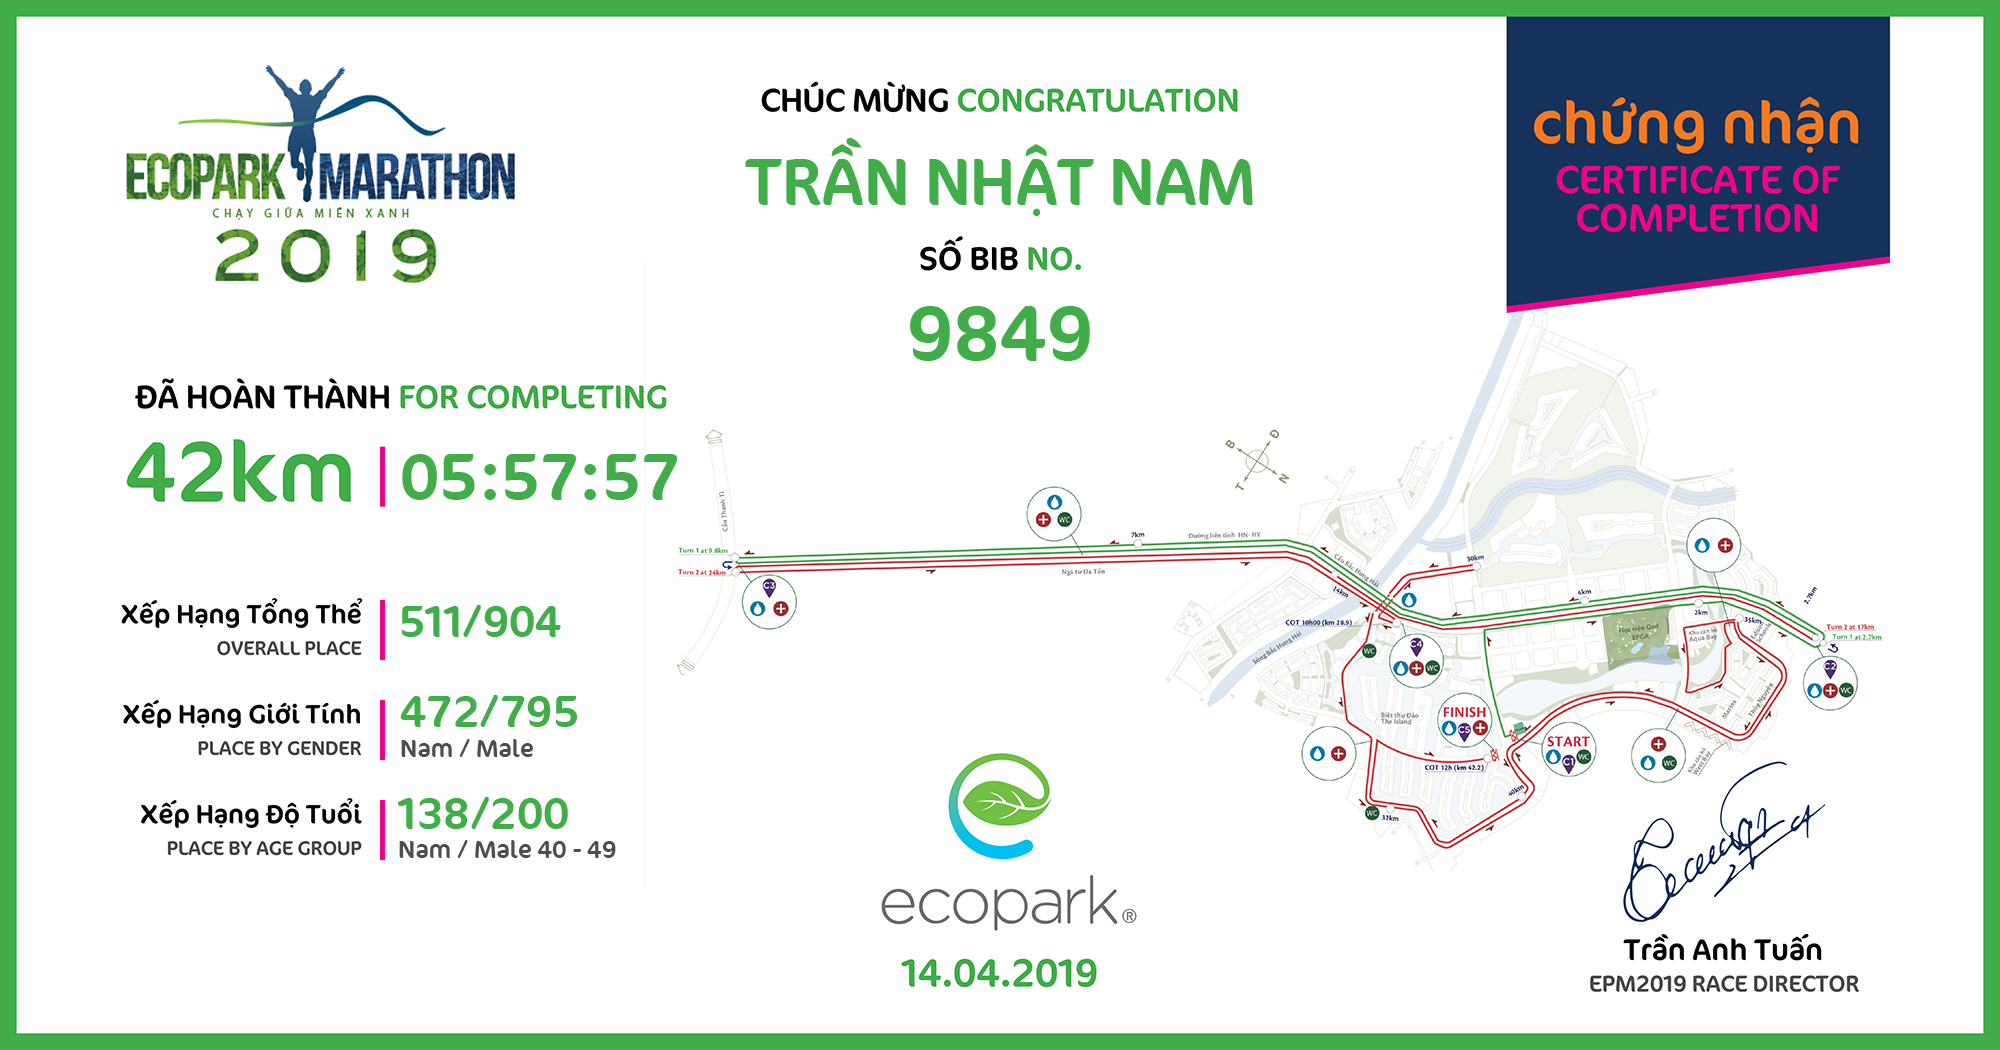 9849 - Trần Nhật Nam